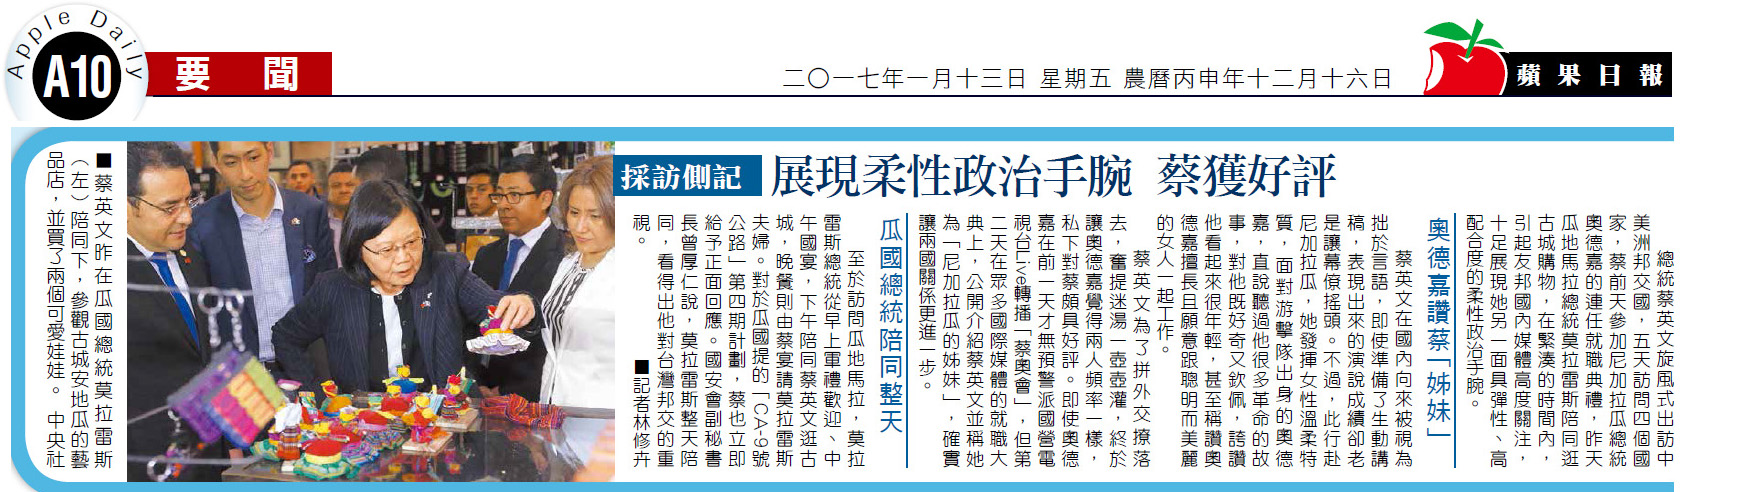 President Tsai praised for deft political touch